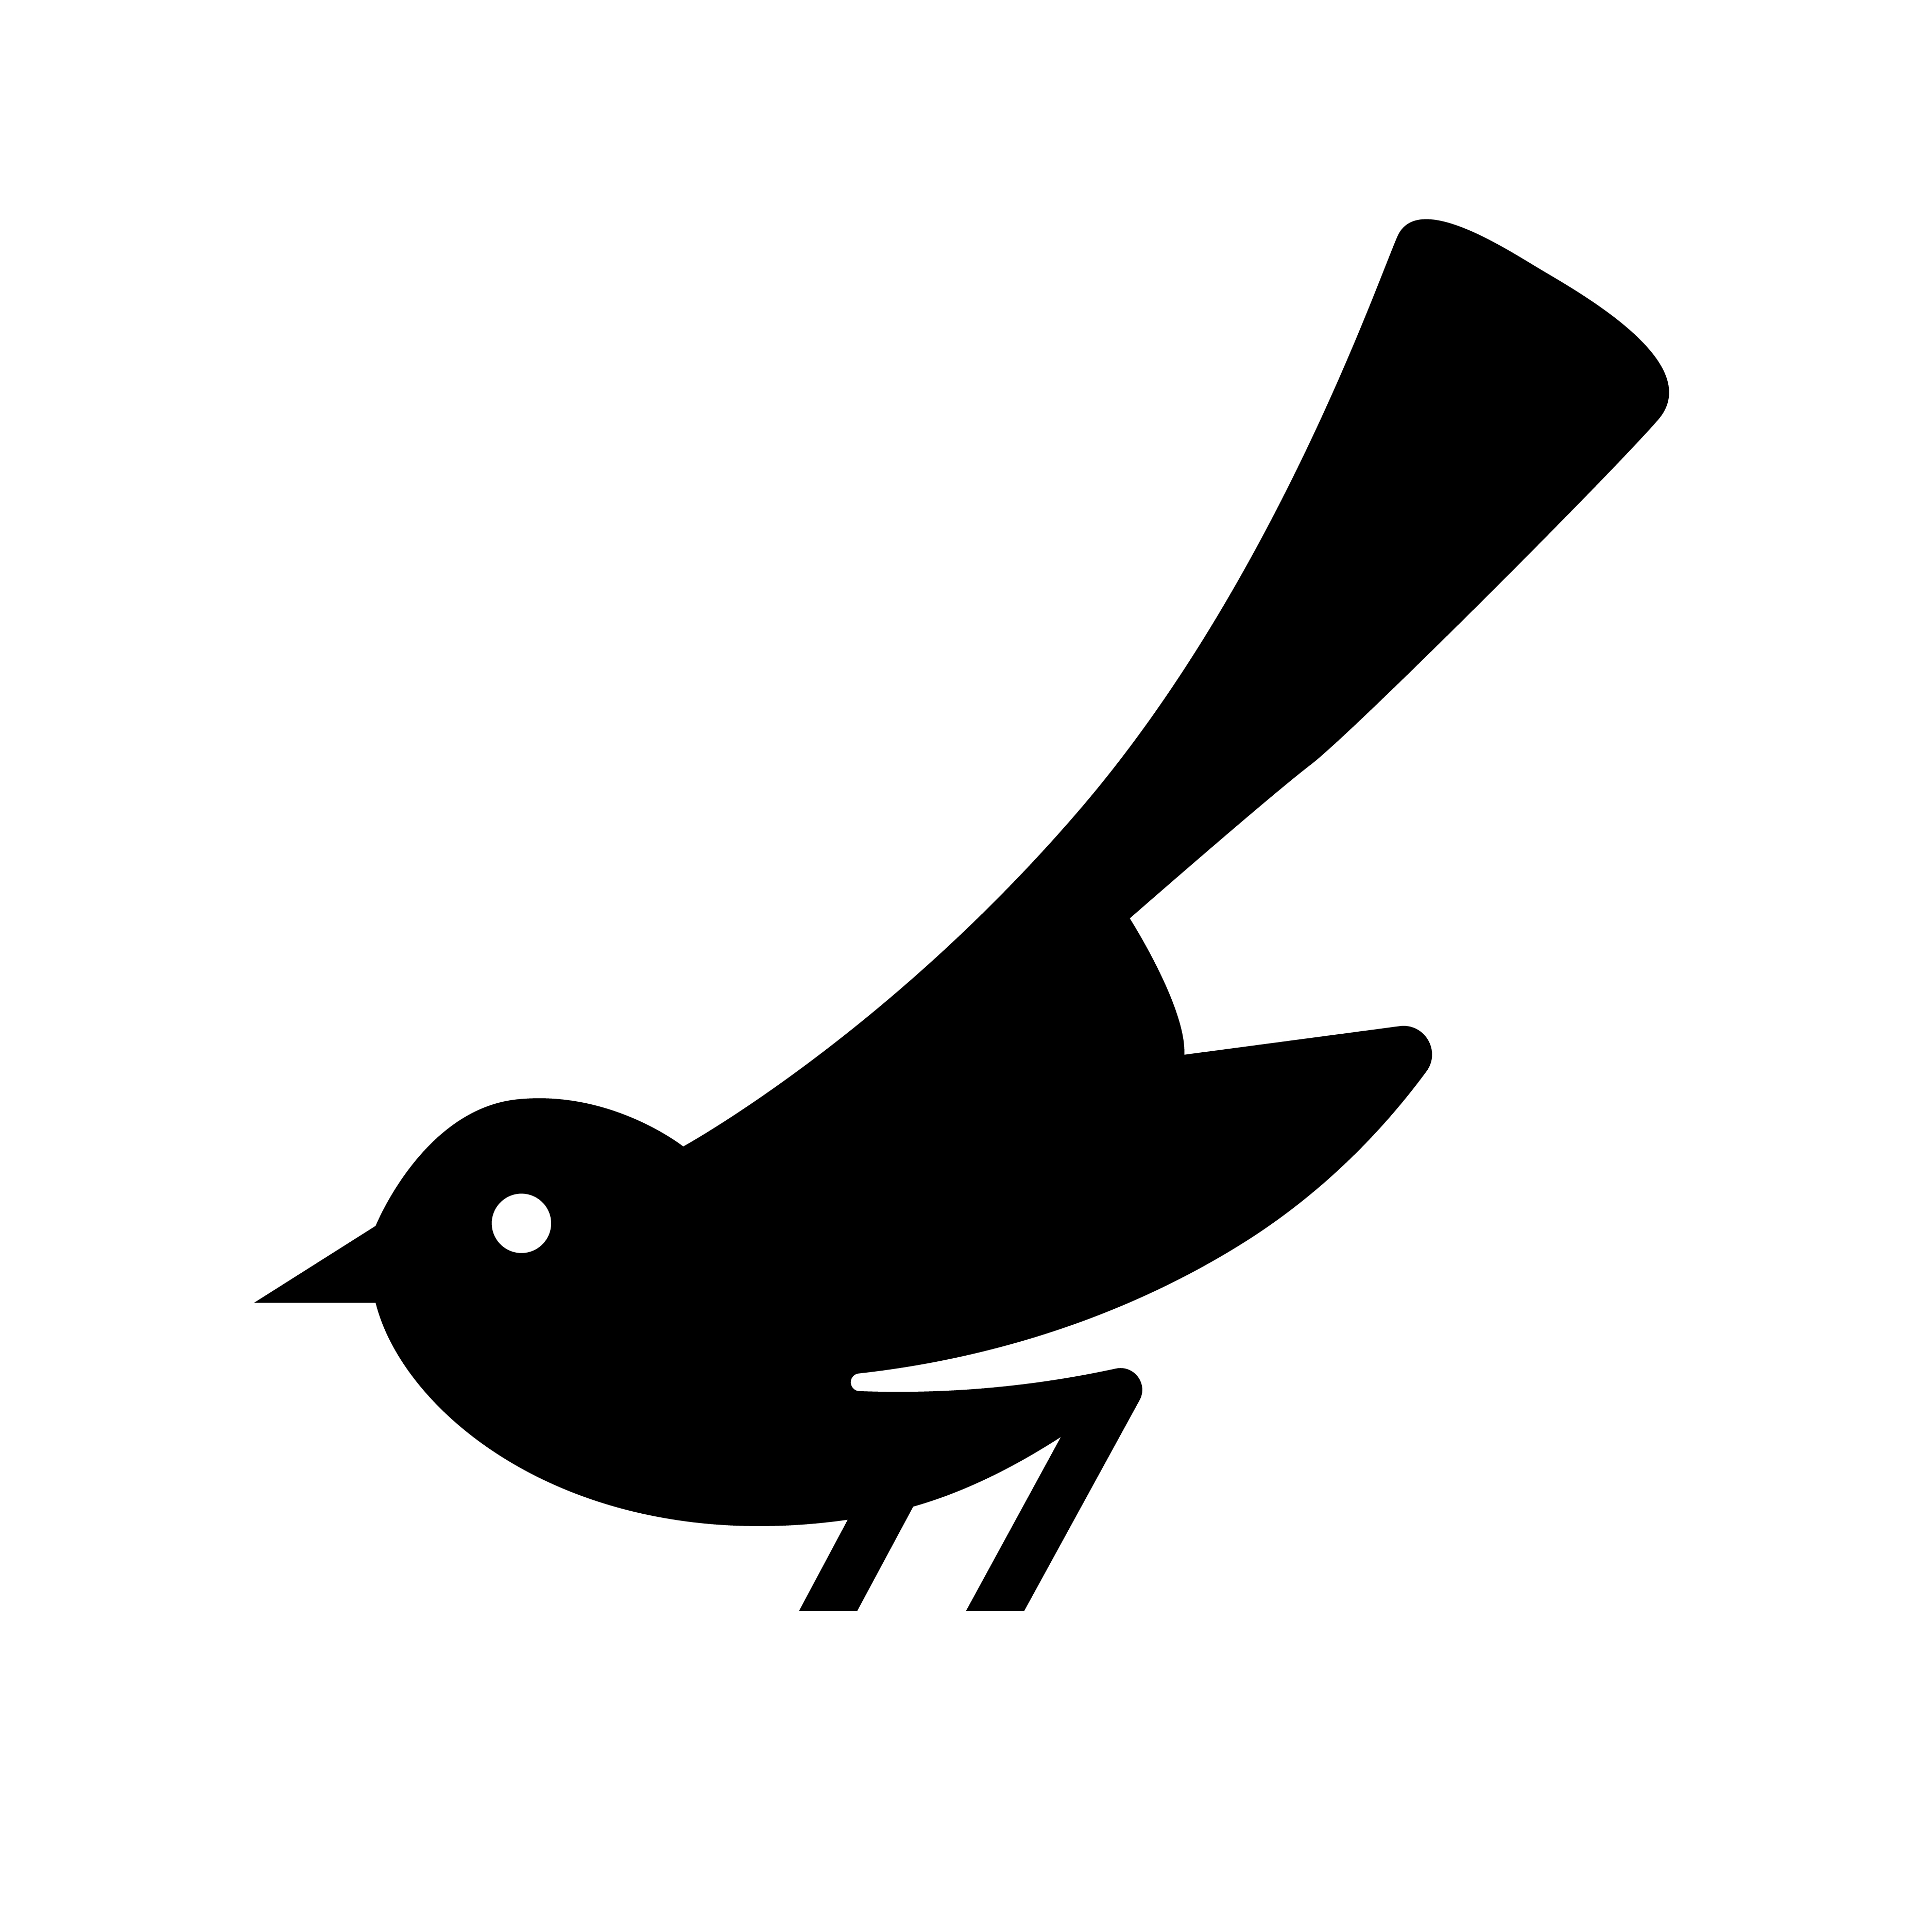 Bird logo design by logo designer JK Design Co. for your inspiration and for the worlds largest logo competition